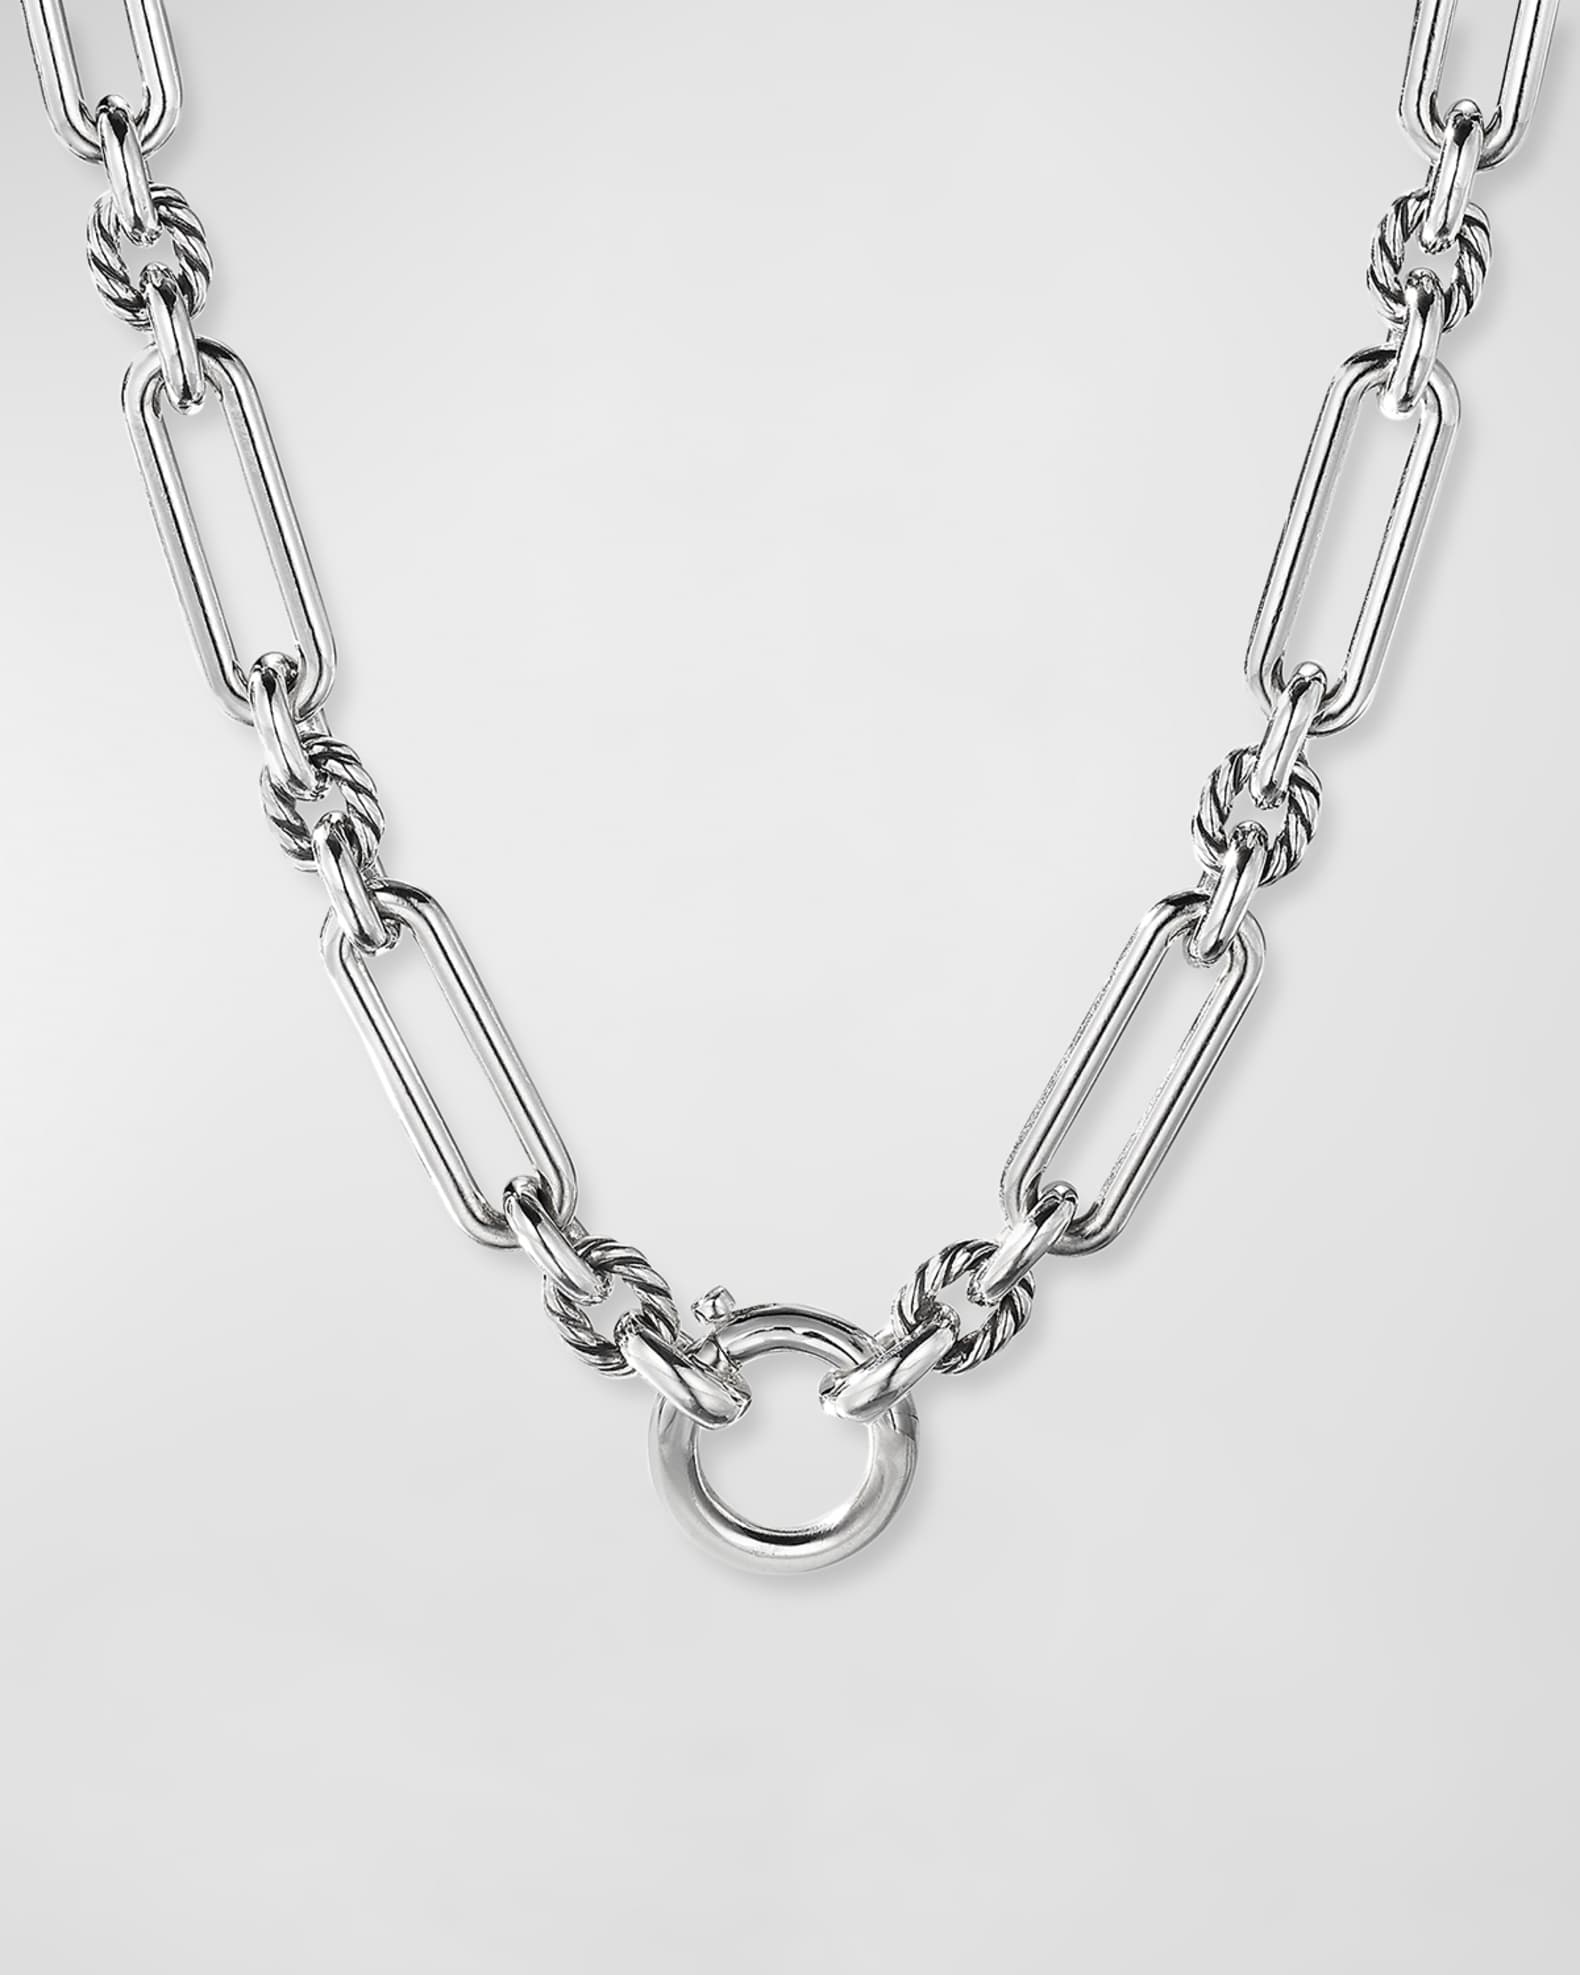 David Yurman Lexington Chain Necklace in Sterling Silver, 20